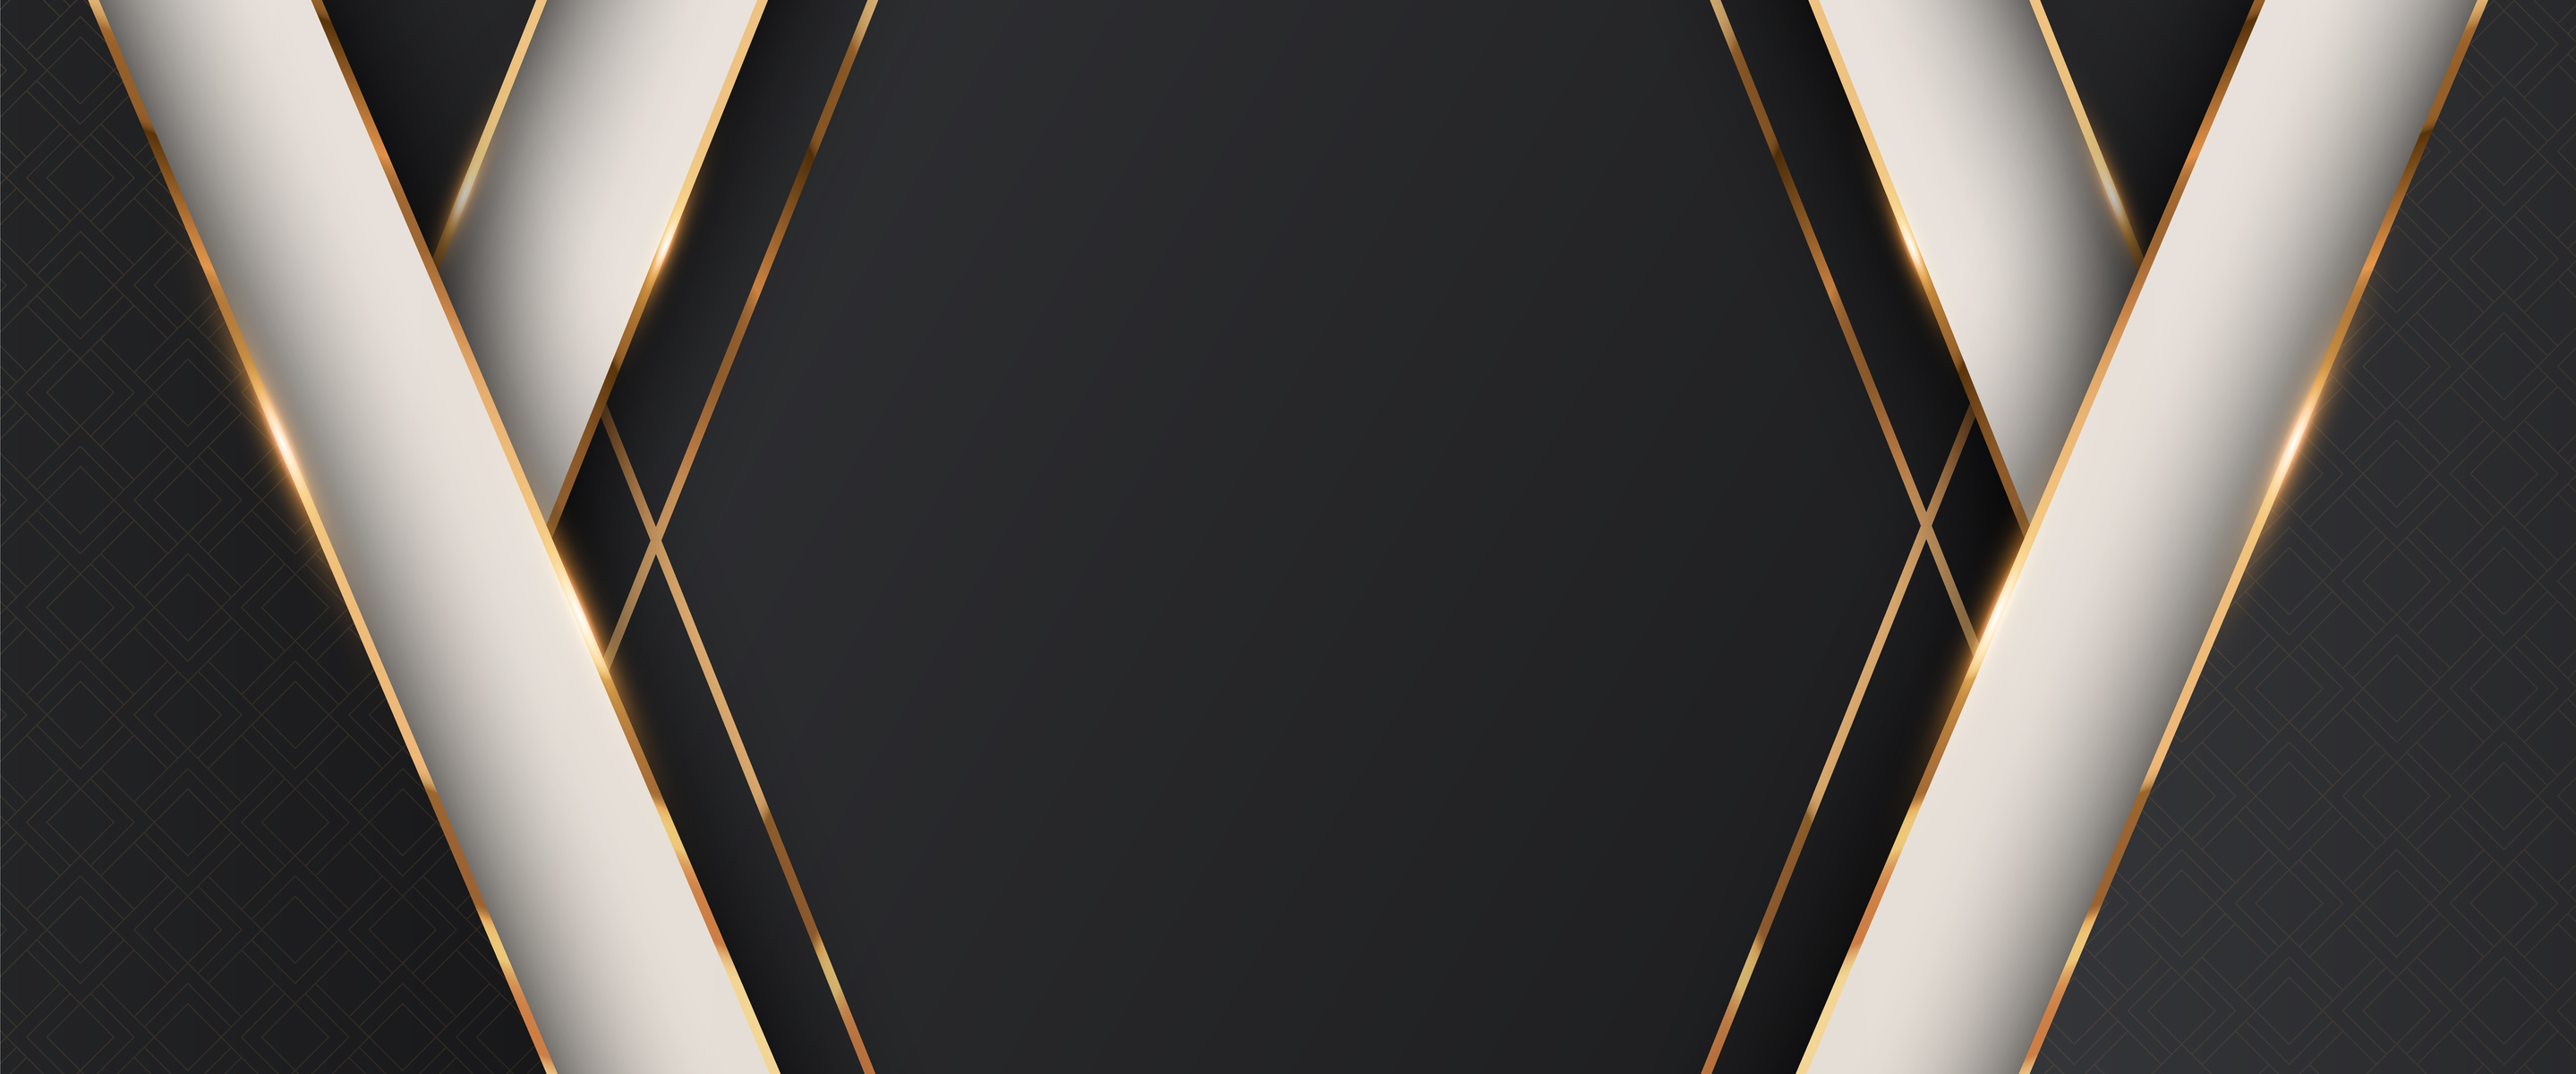 Black Luxury background. Award nomination backdrop with gold lines.